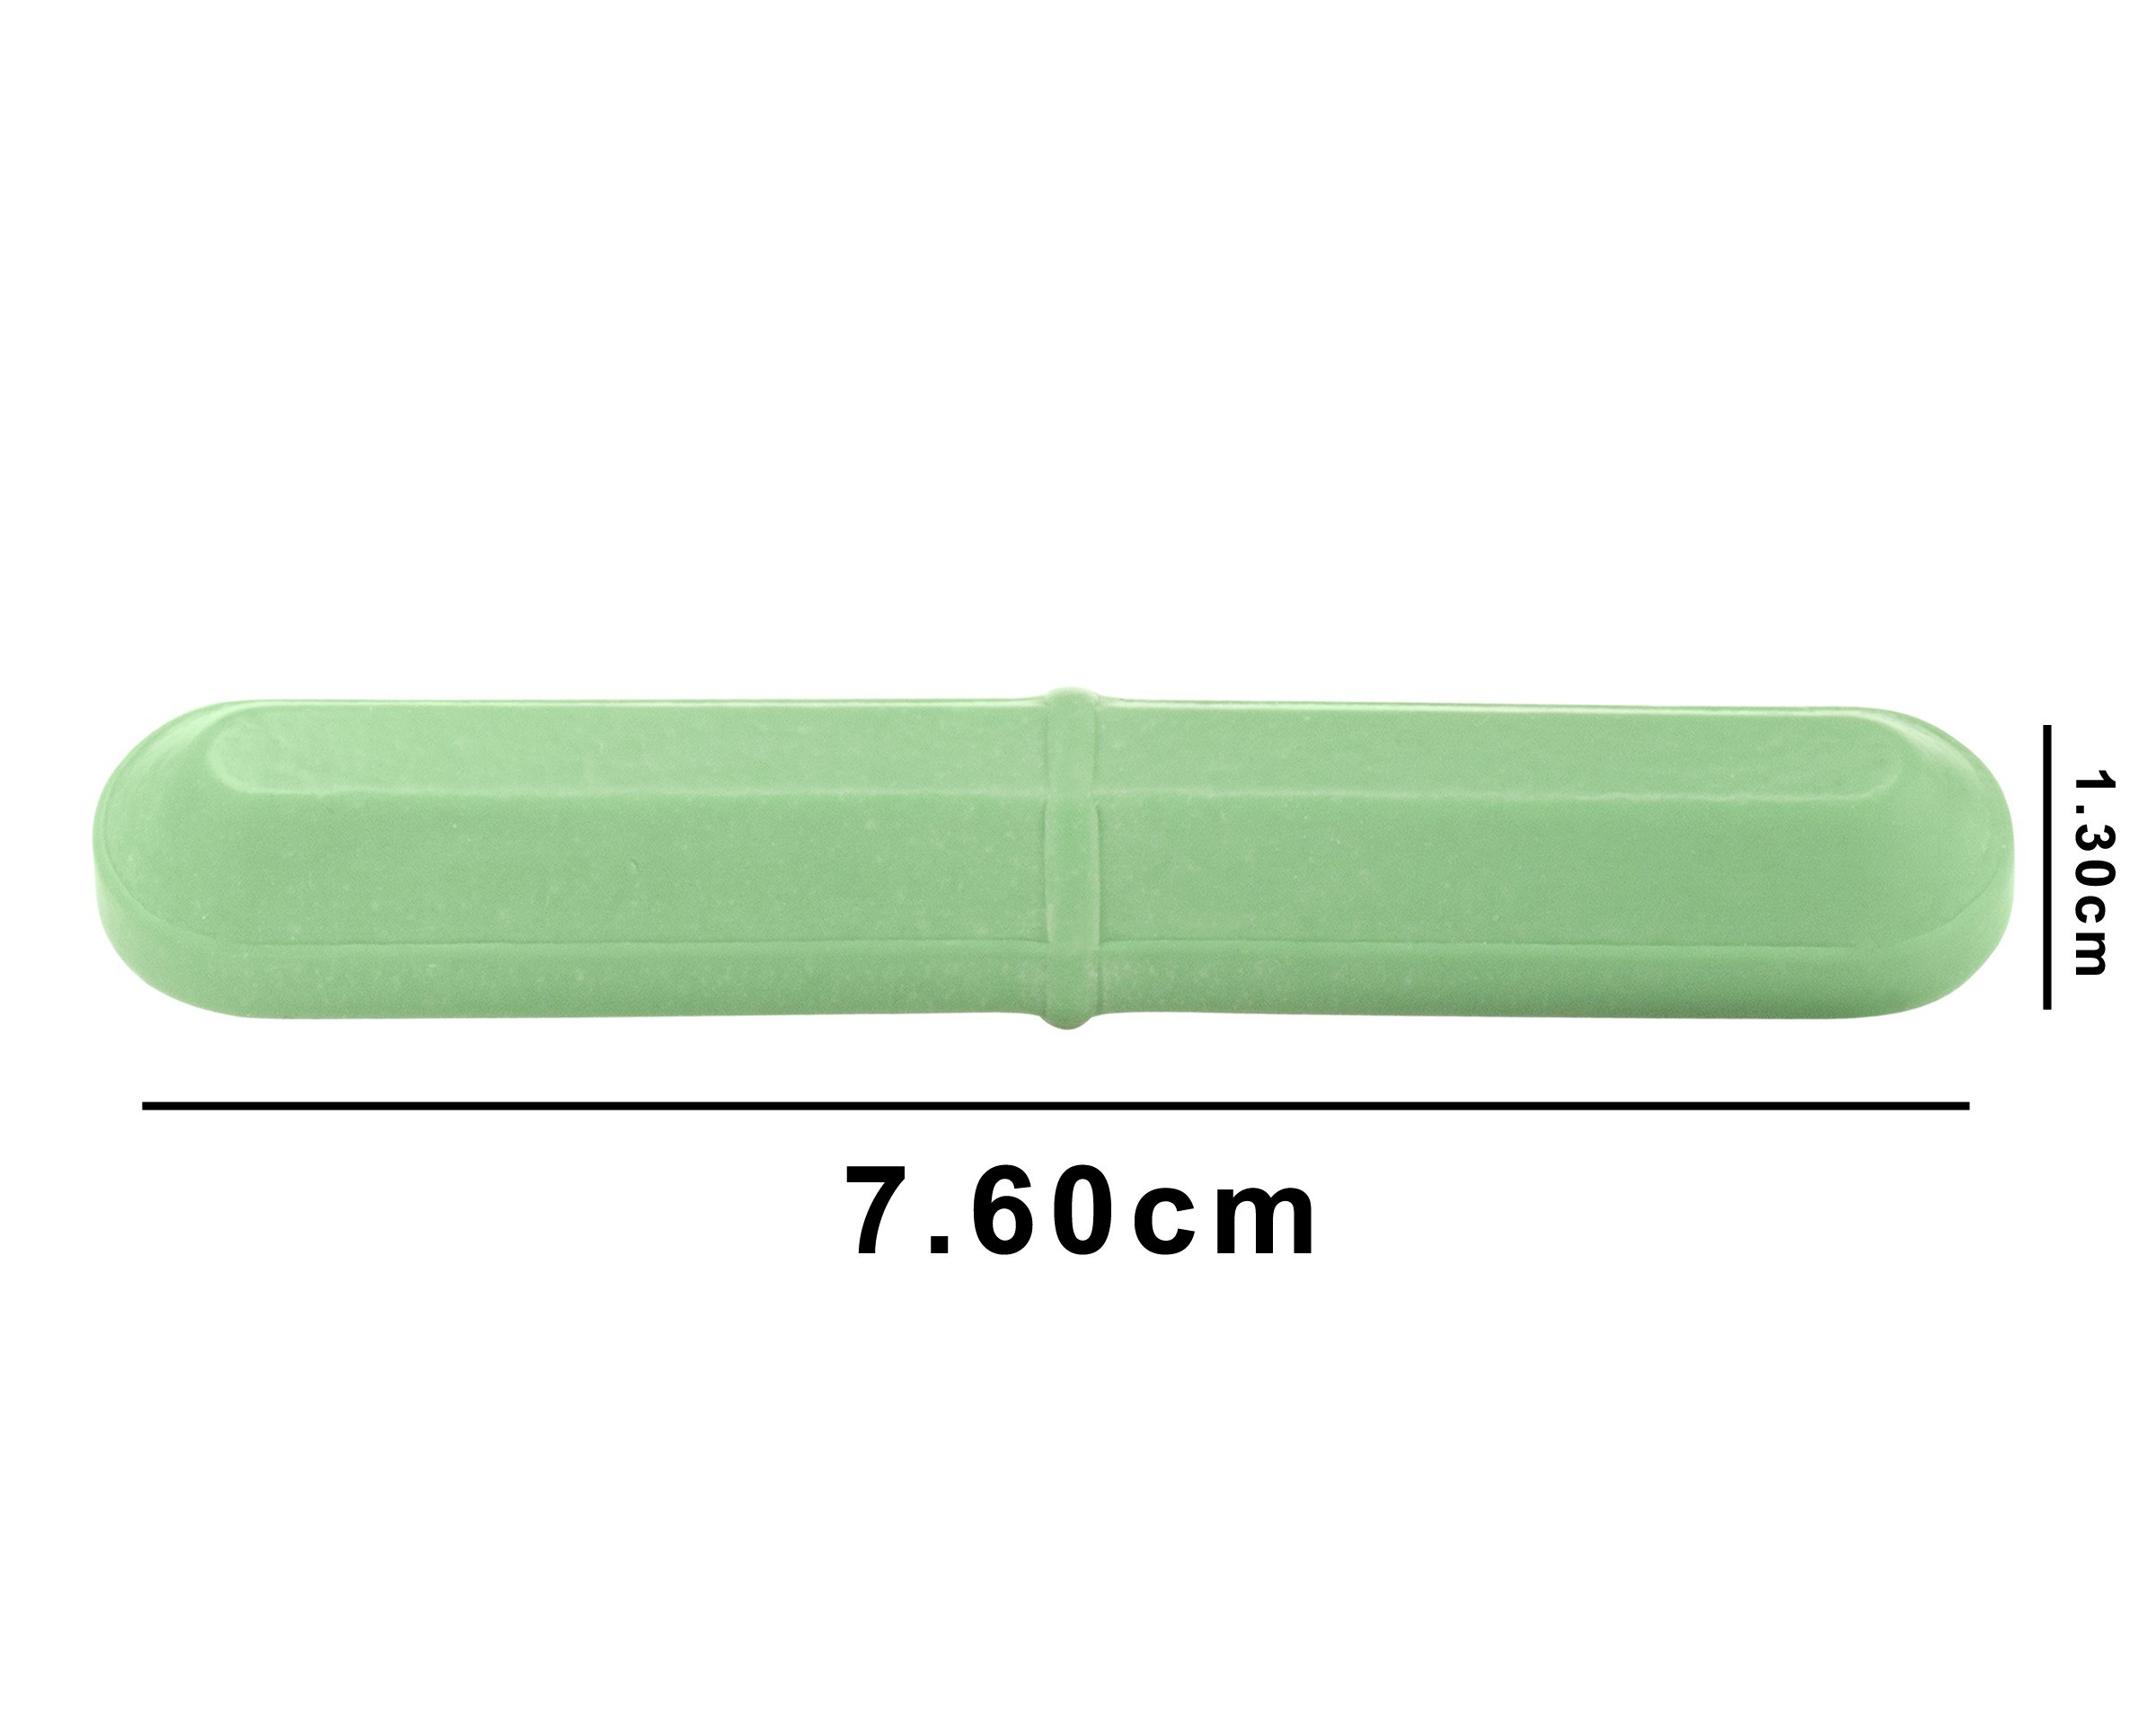 SP Bel-Art Spinbar Rare Earth Teflon Octagon Magnetic Stirring Bar; 7.60 x 1.30cm, Green